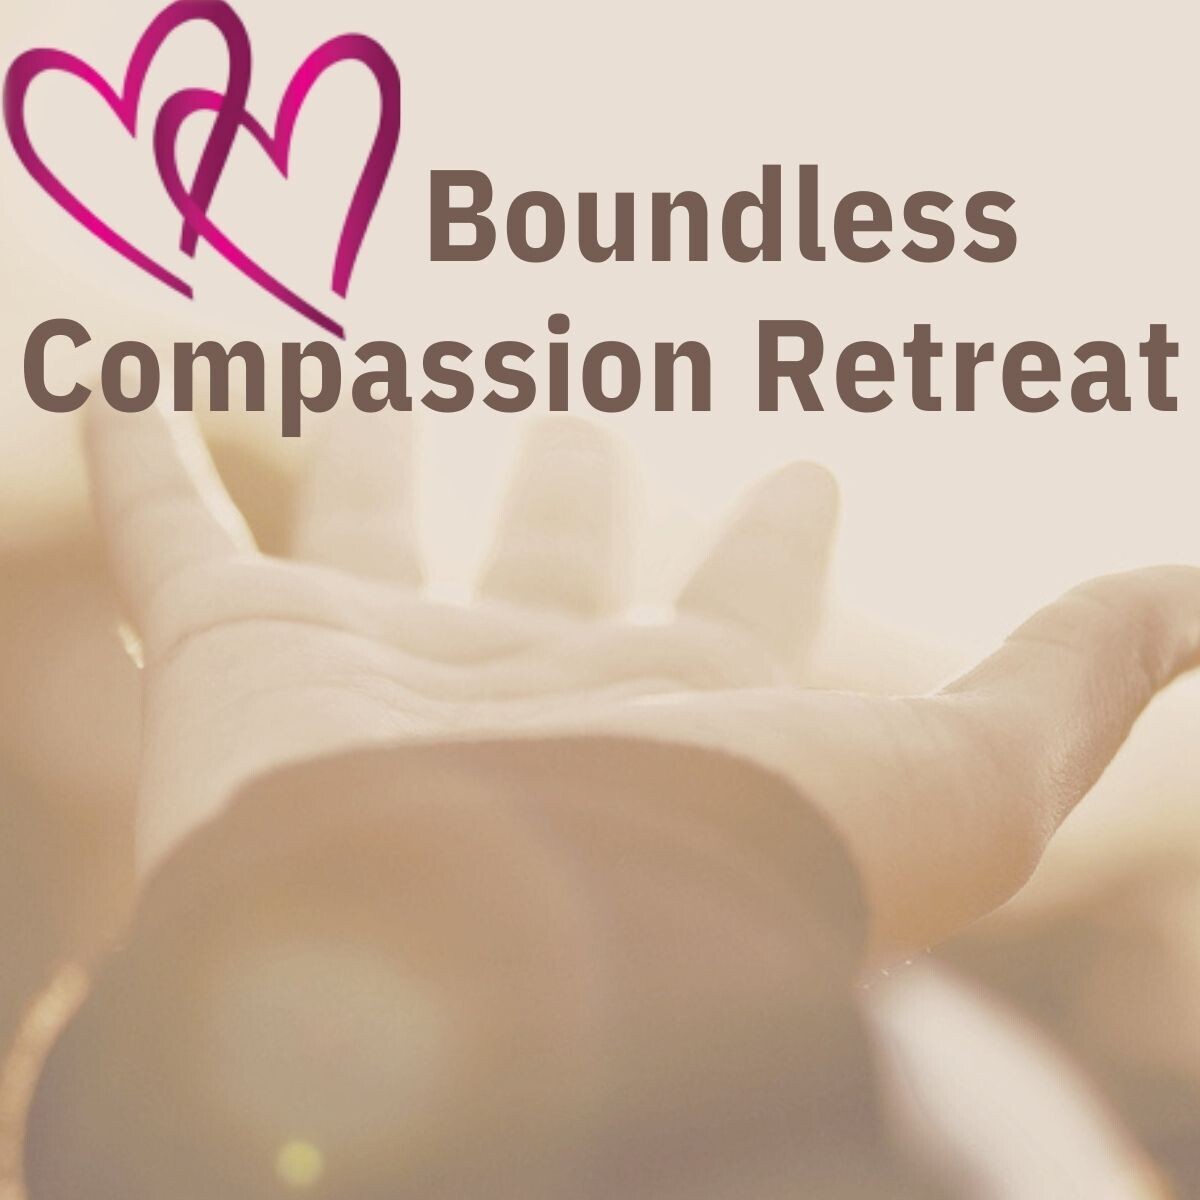 Boundless Compassion Retreat & Facilitator Training